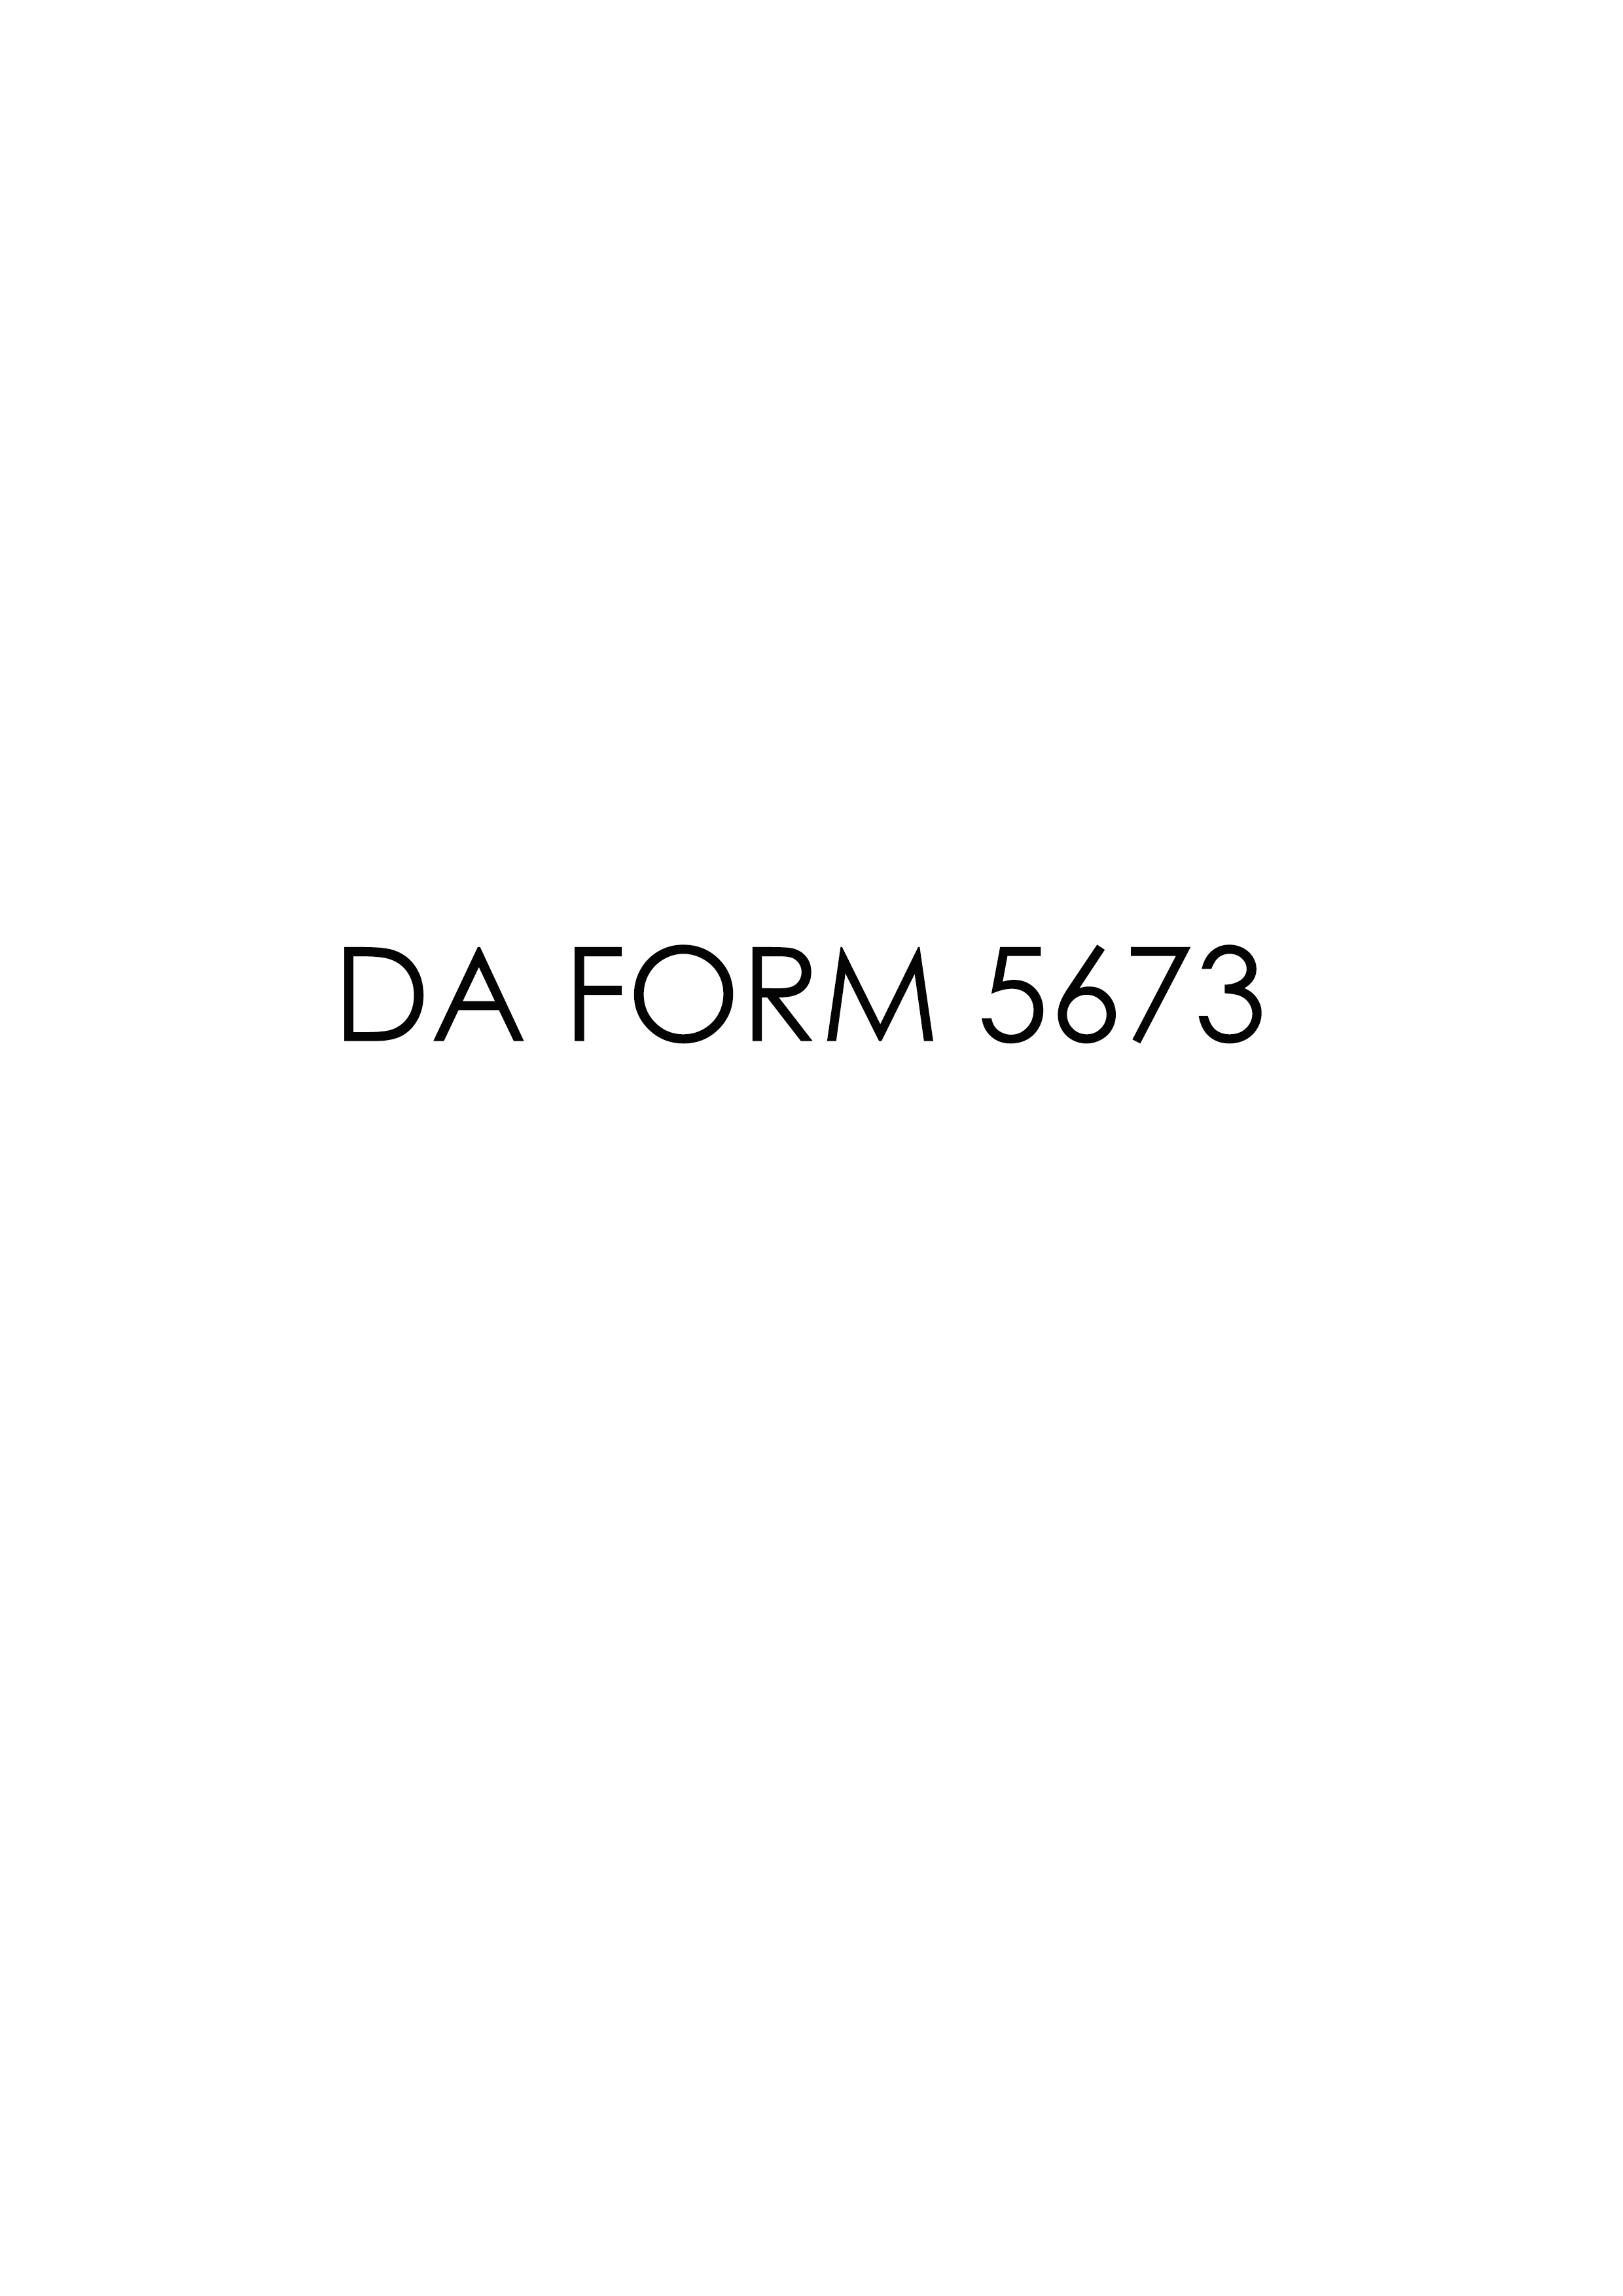 da Form 5673 fillable